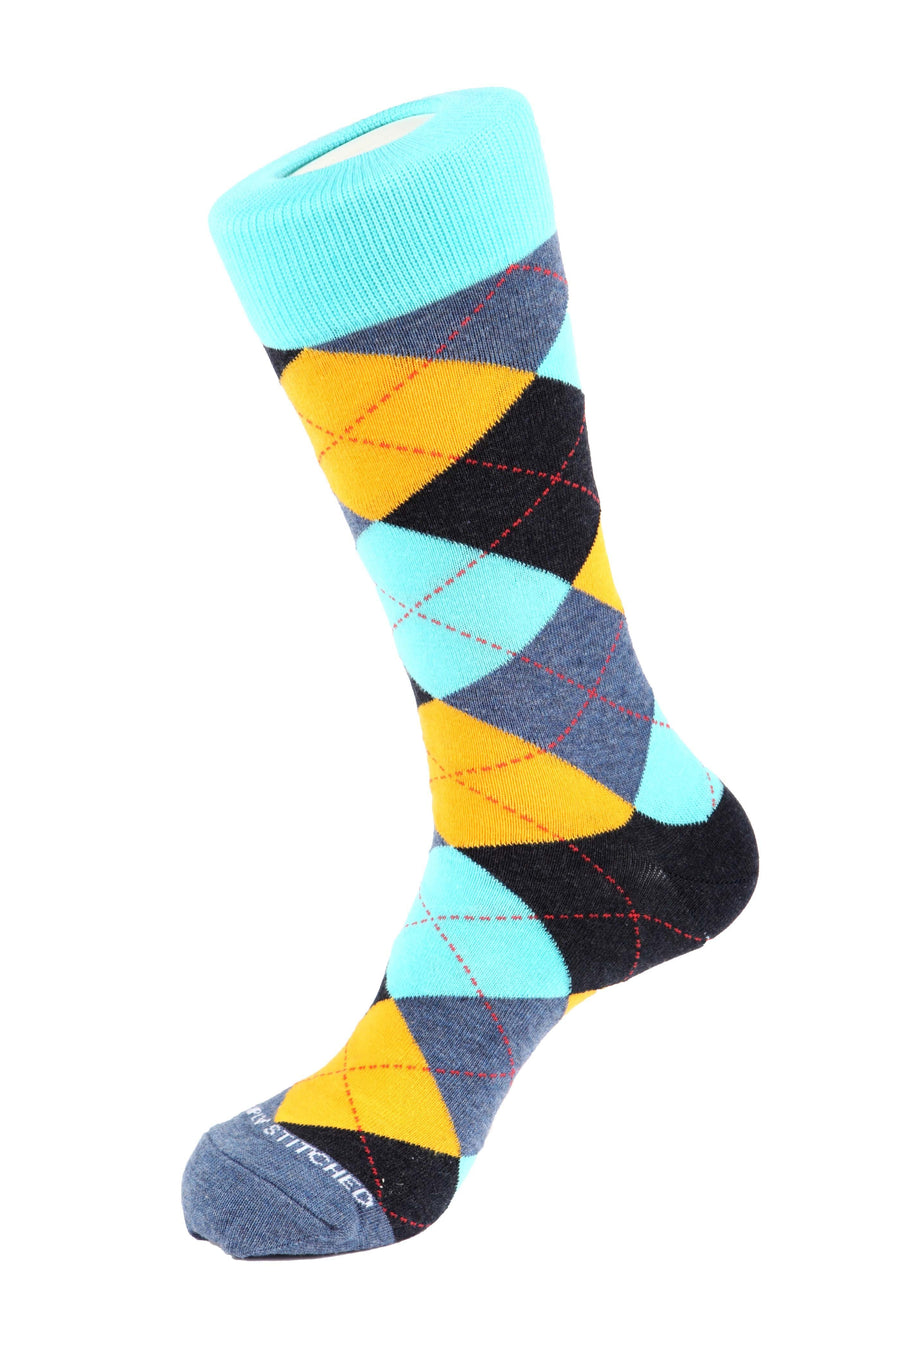 Argyle Dress Socks by Unsimply Stitched